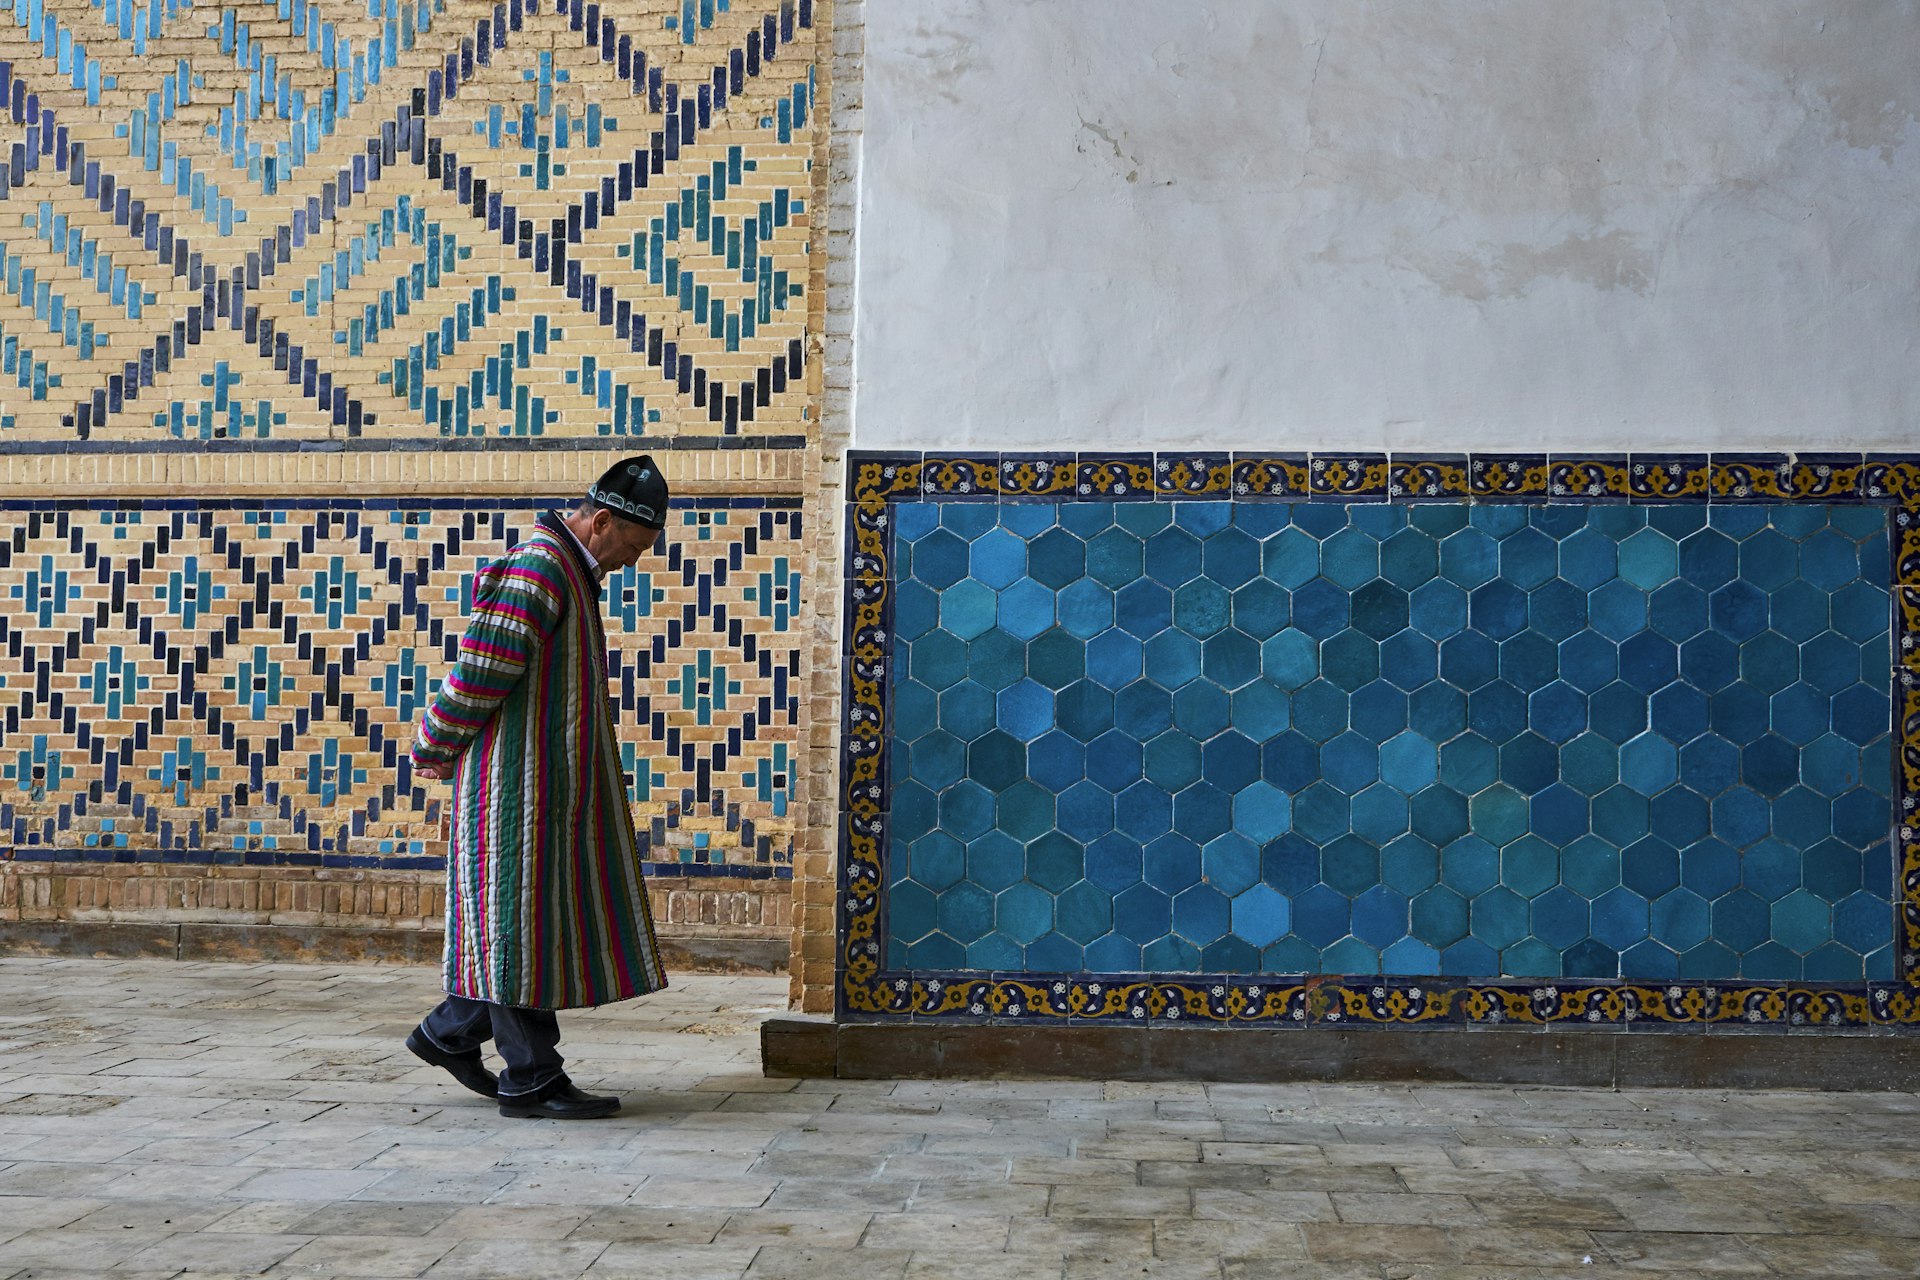 A man walks by patterned tiles in the Kalon Mosque, Bukhara, Uzbekistan